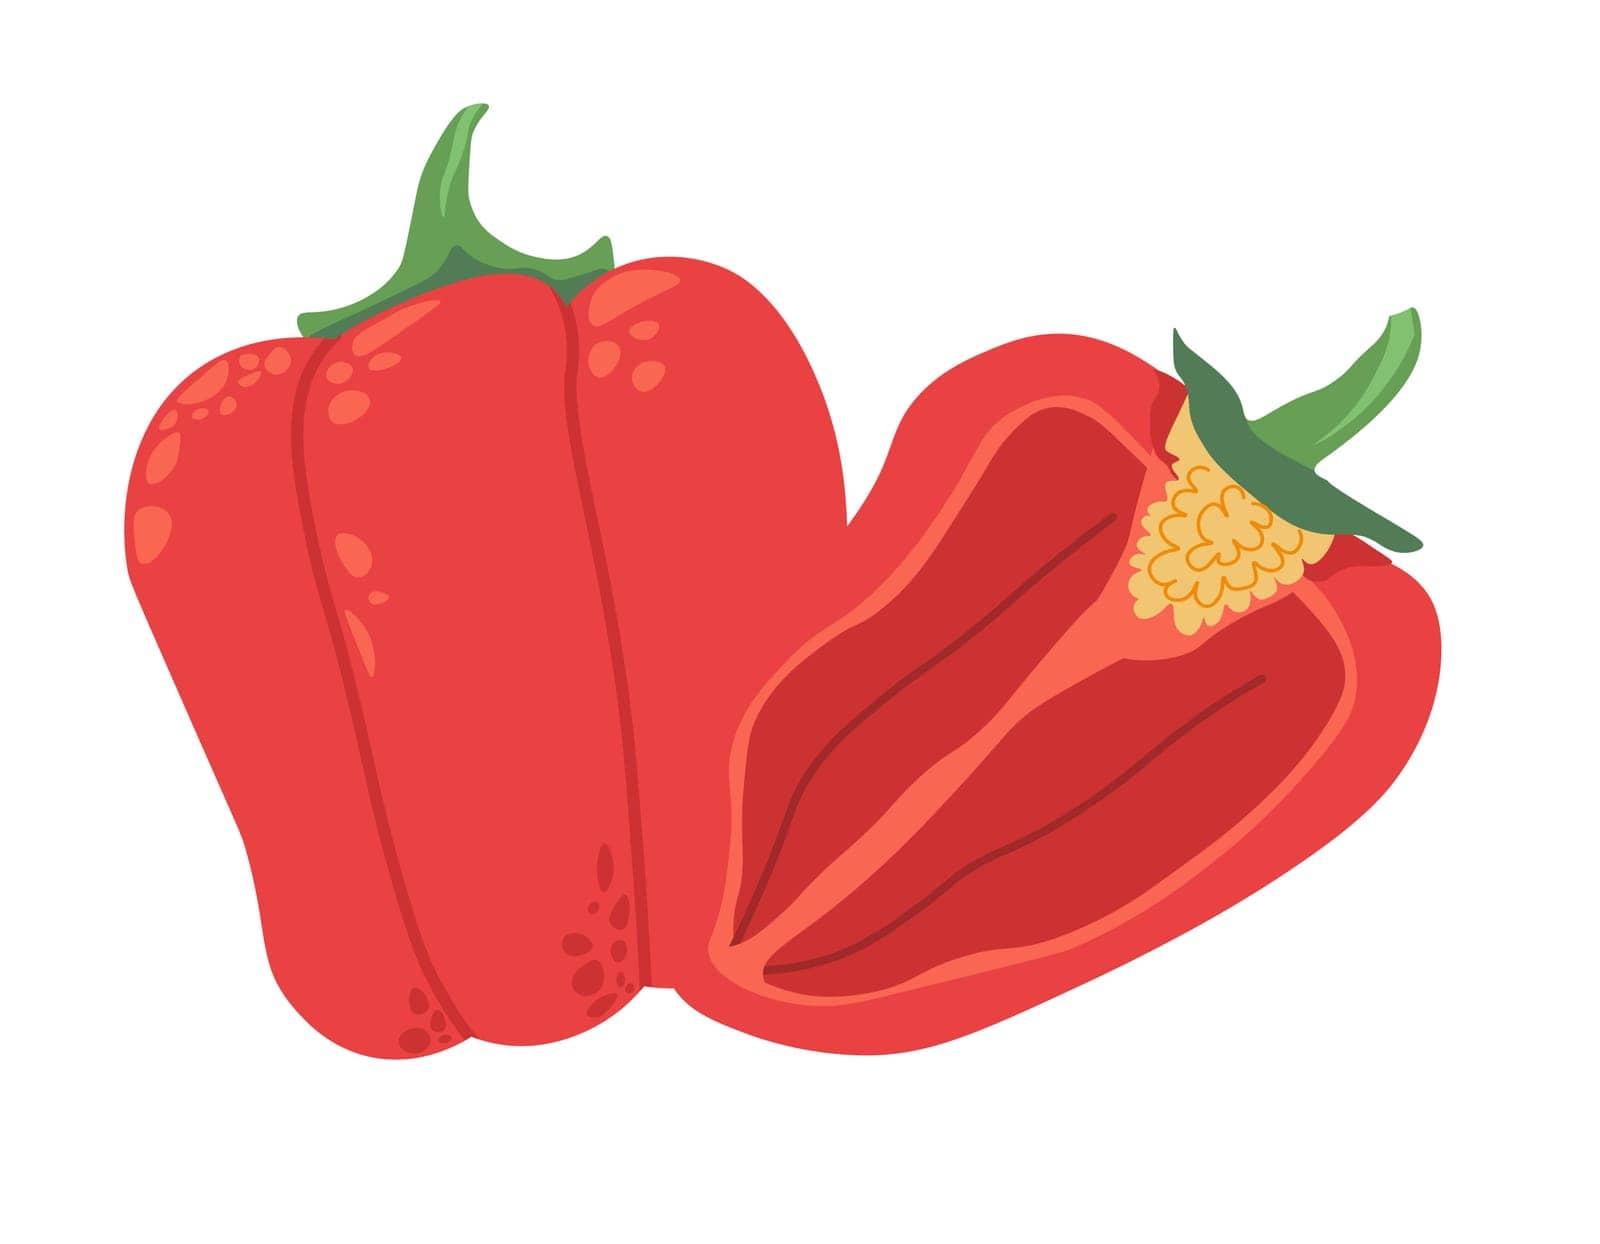 Bell pepper, sweet paprika vegetable fresh veggie by Sonulkaster